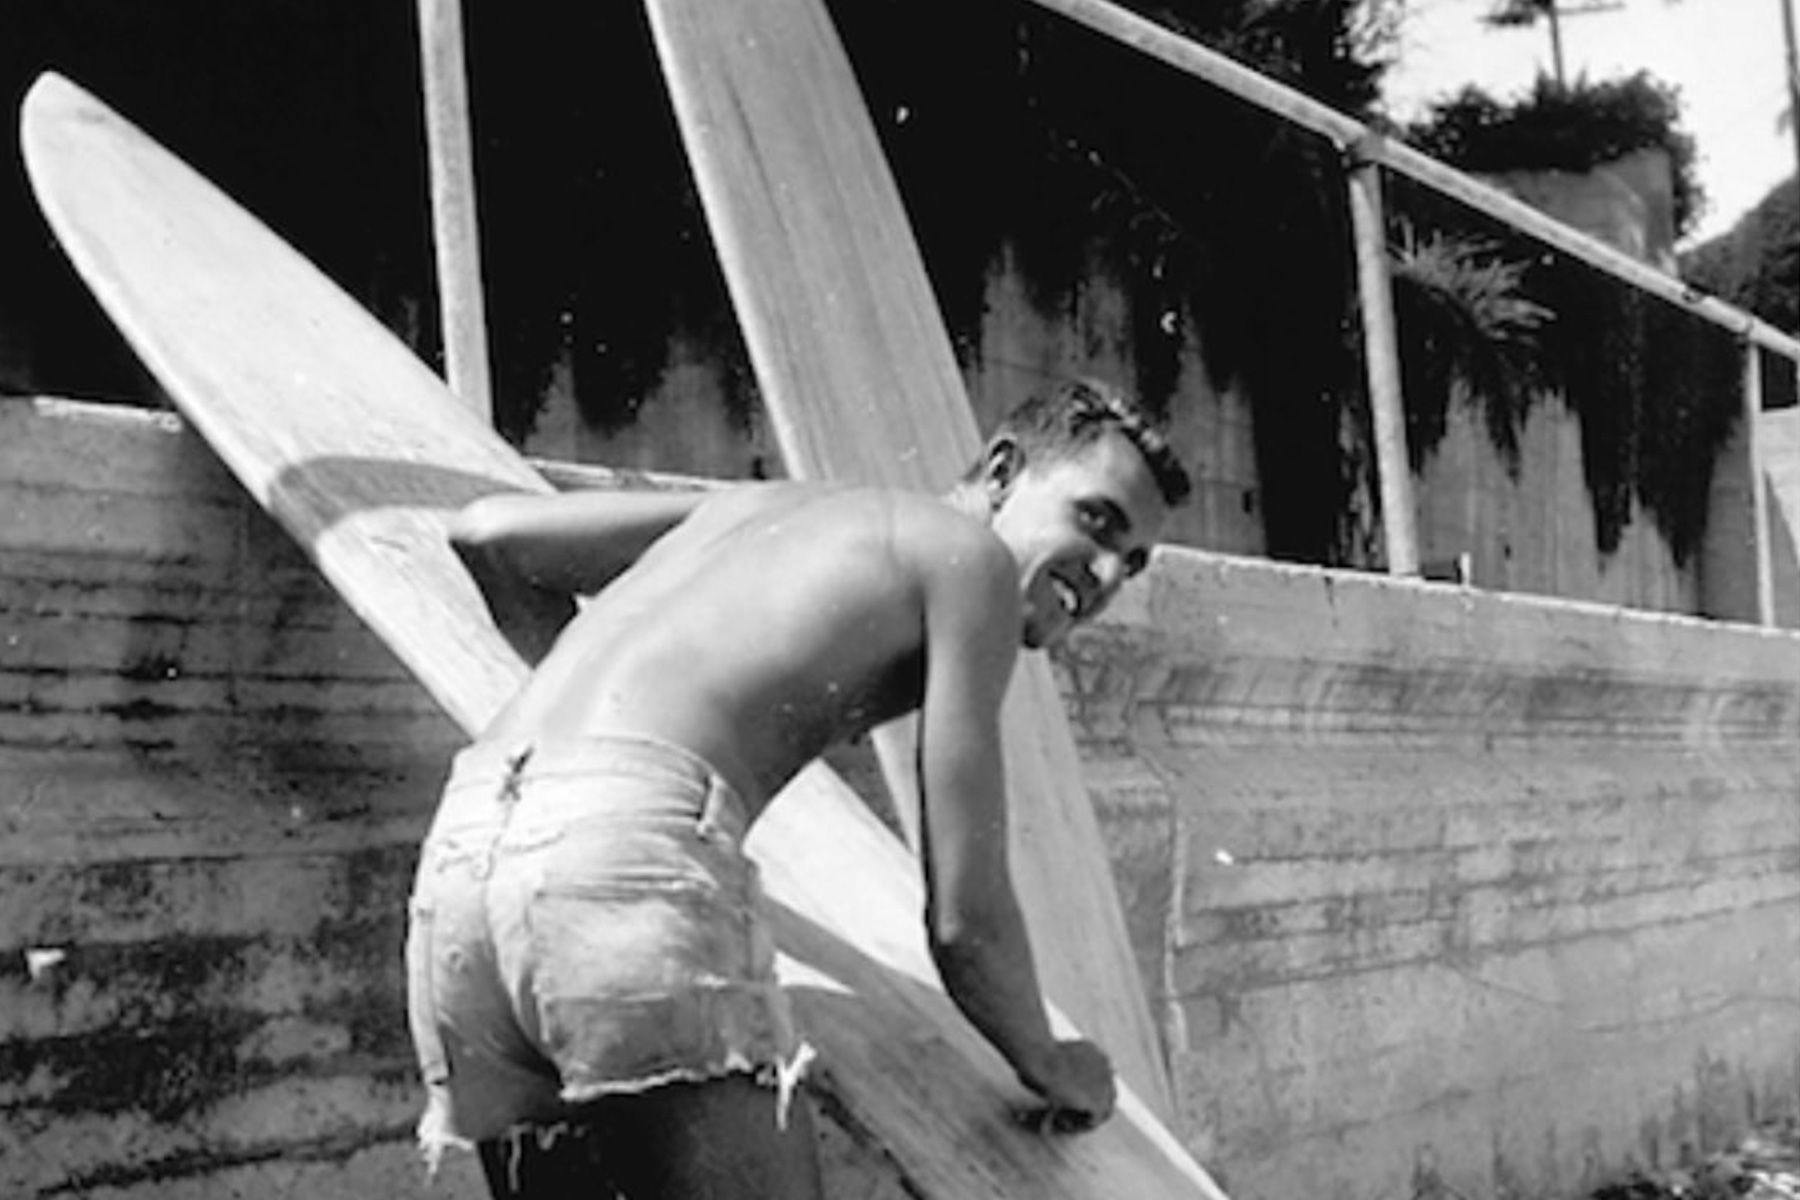 dick metz waxing a surfboard in the 1950s